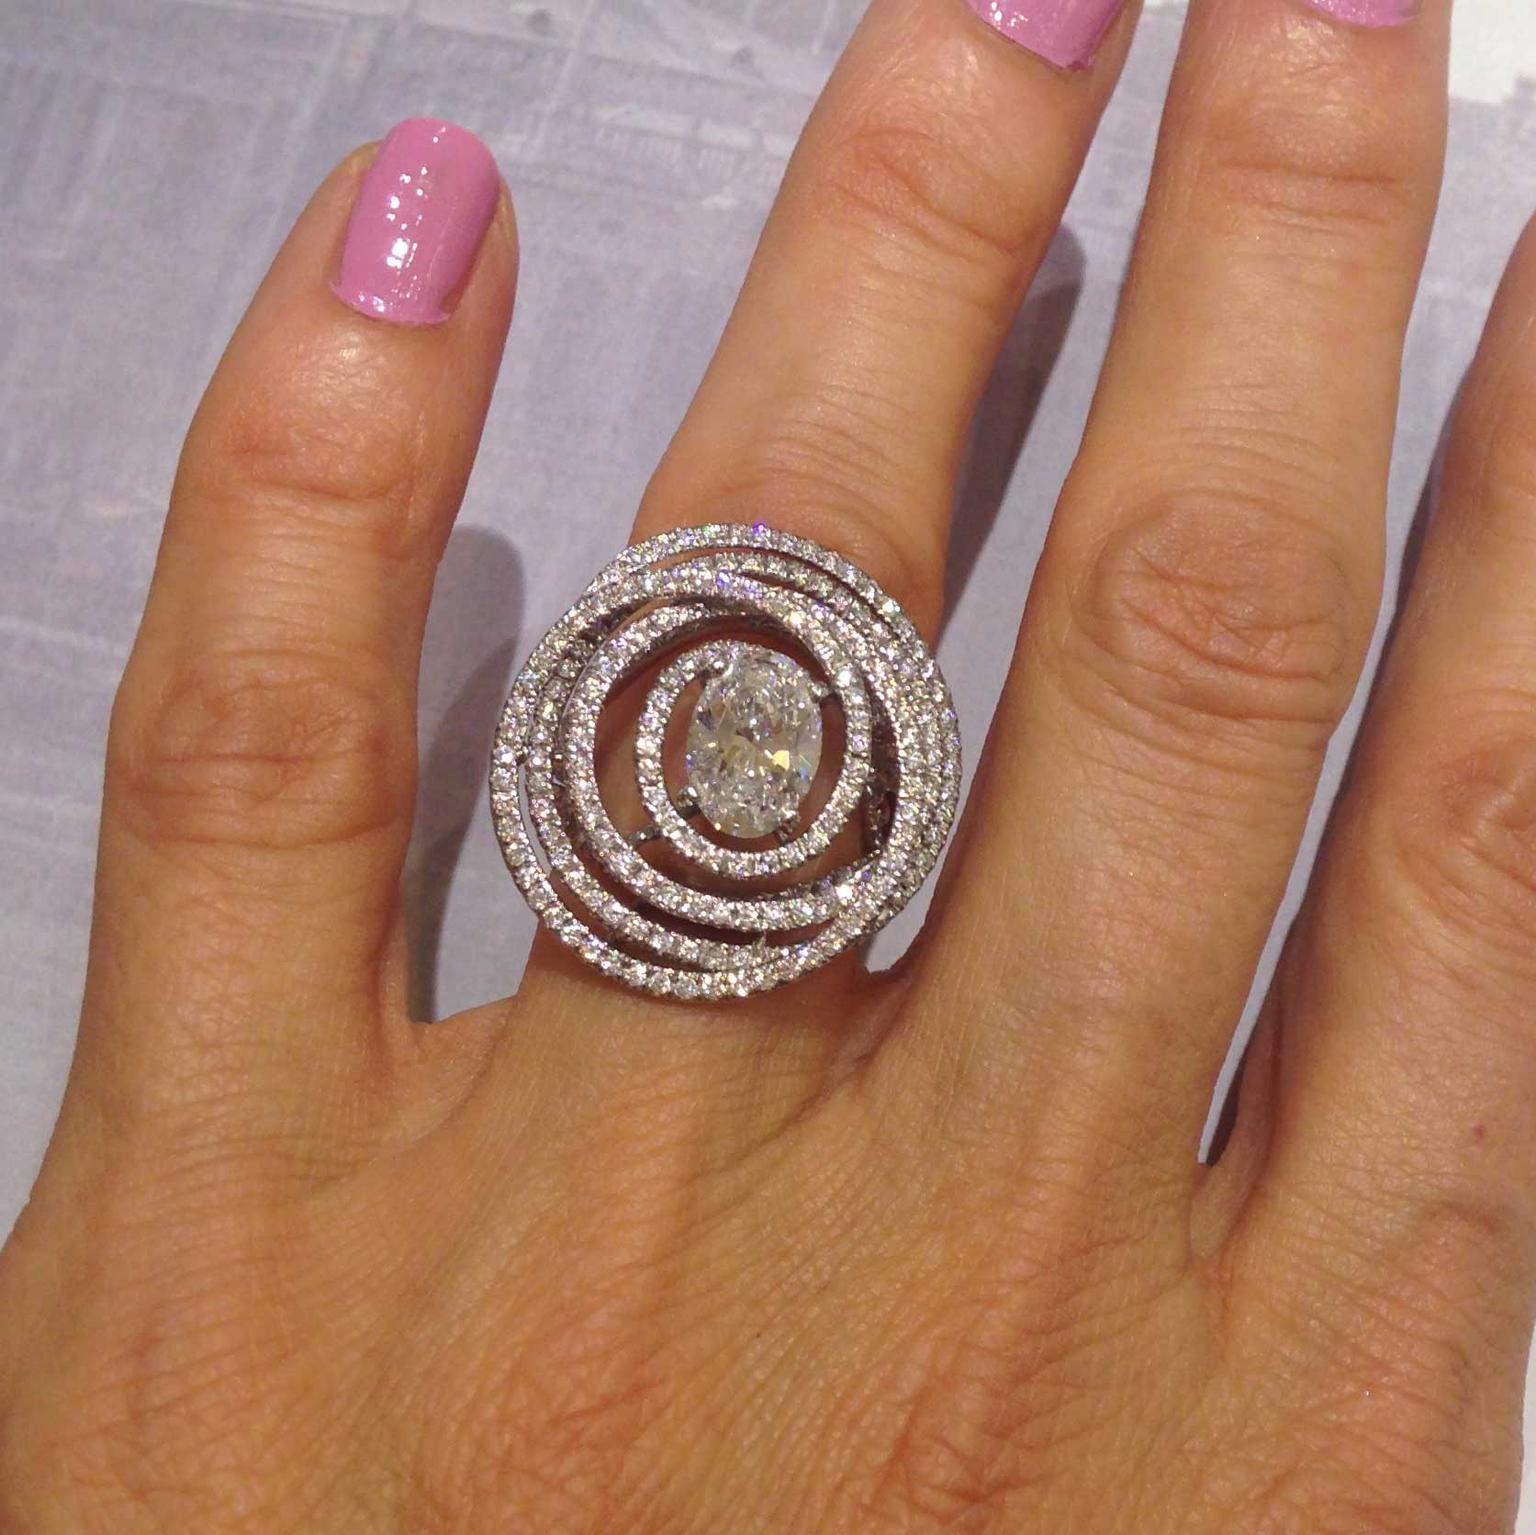 Chanel oval cut diamond ring